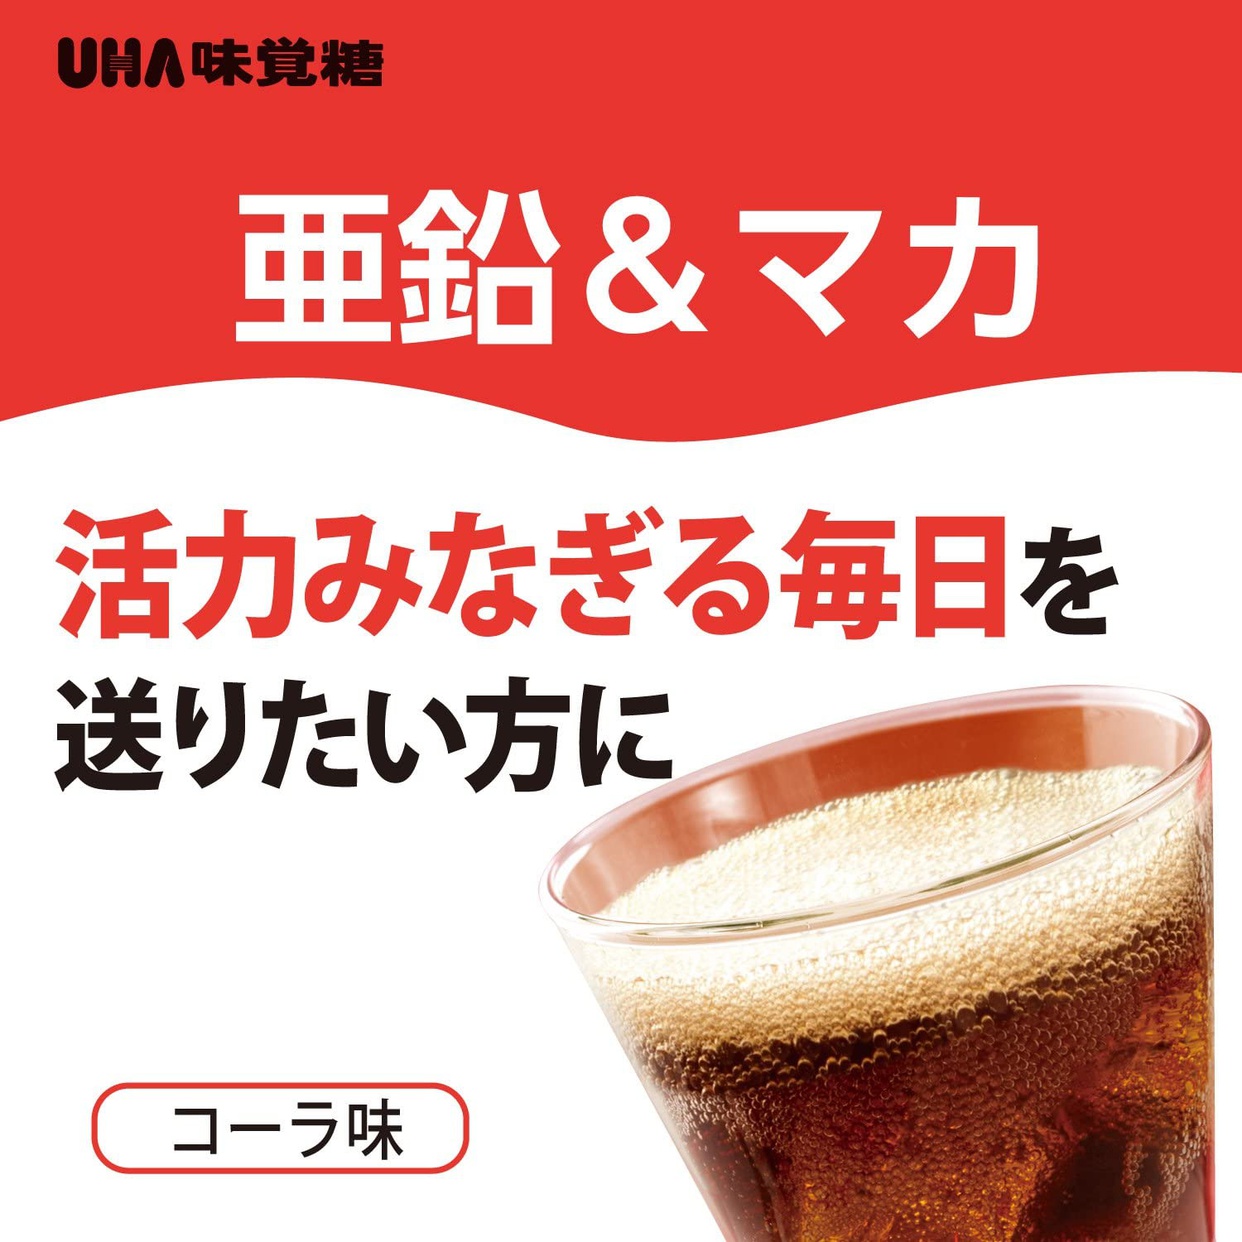 UHA味覚糖 グミサプリ 亜鉛&マカの商品画像3 